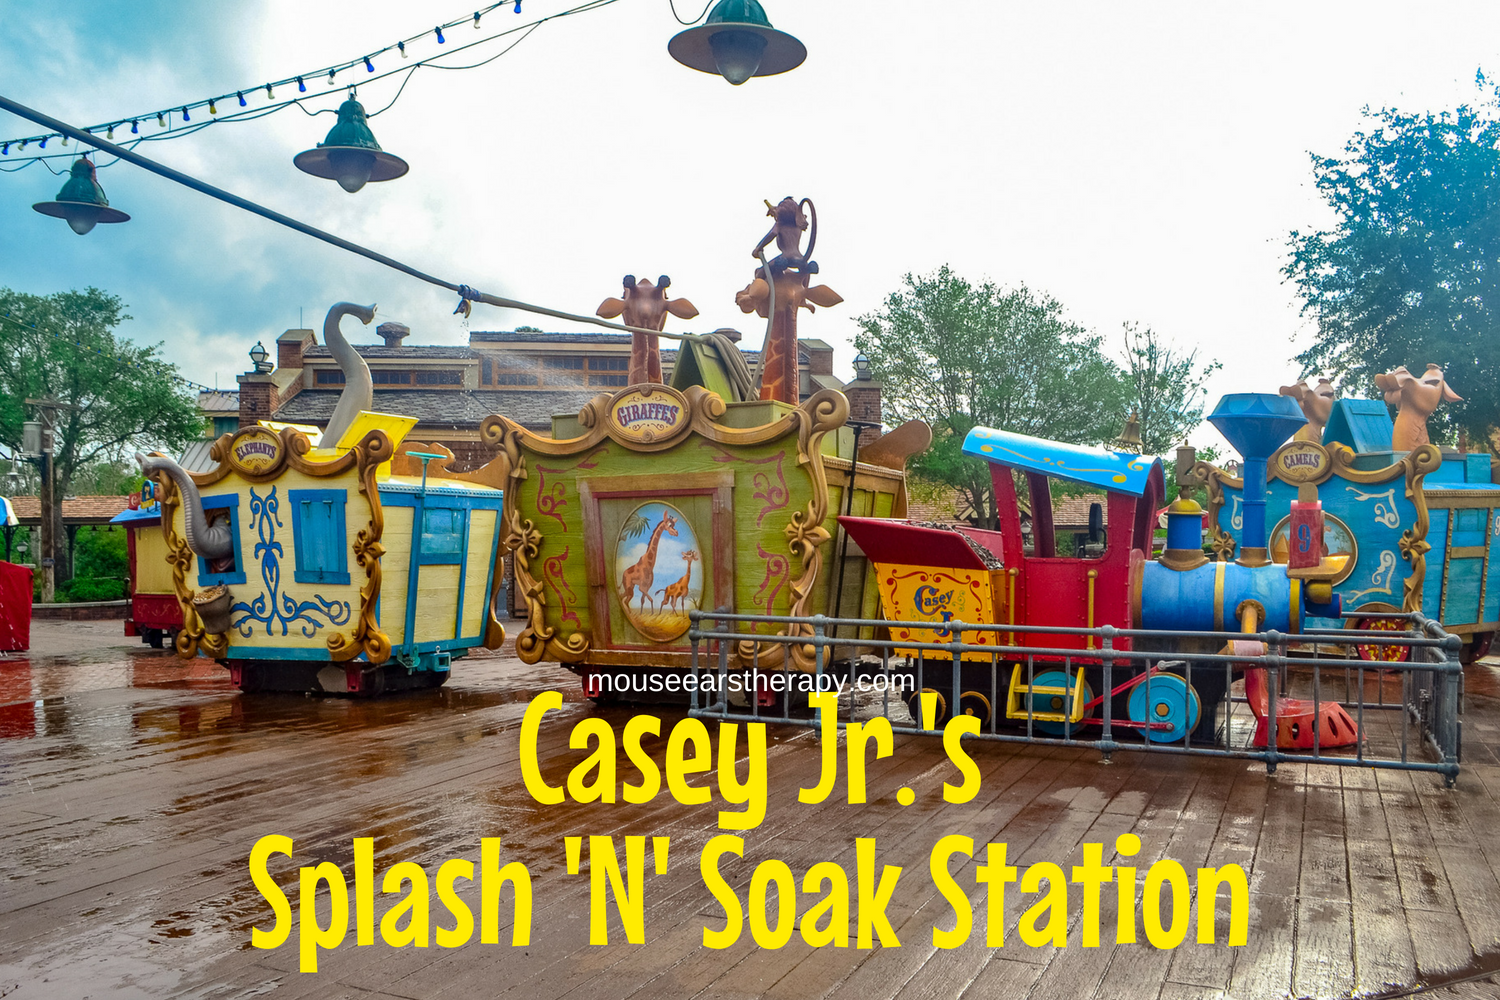 Sensory Break Area, Casey Jr.'s Splash and Soak Station in Fantasyland in Magic Kingdom. Train cars that shoot water for water zone.